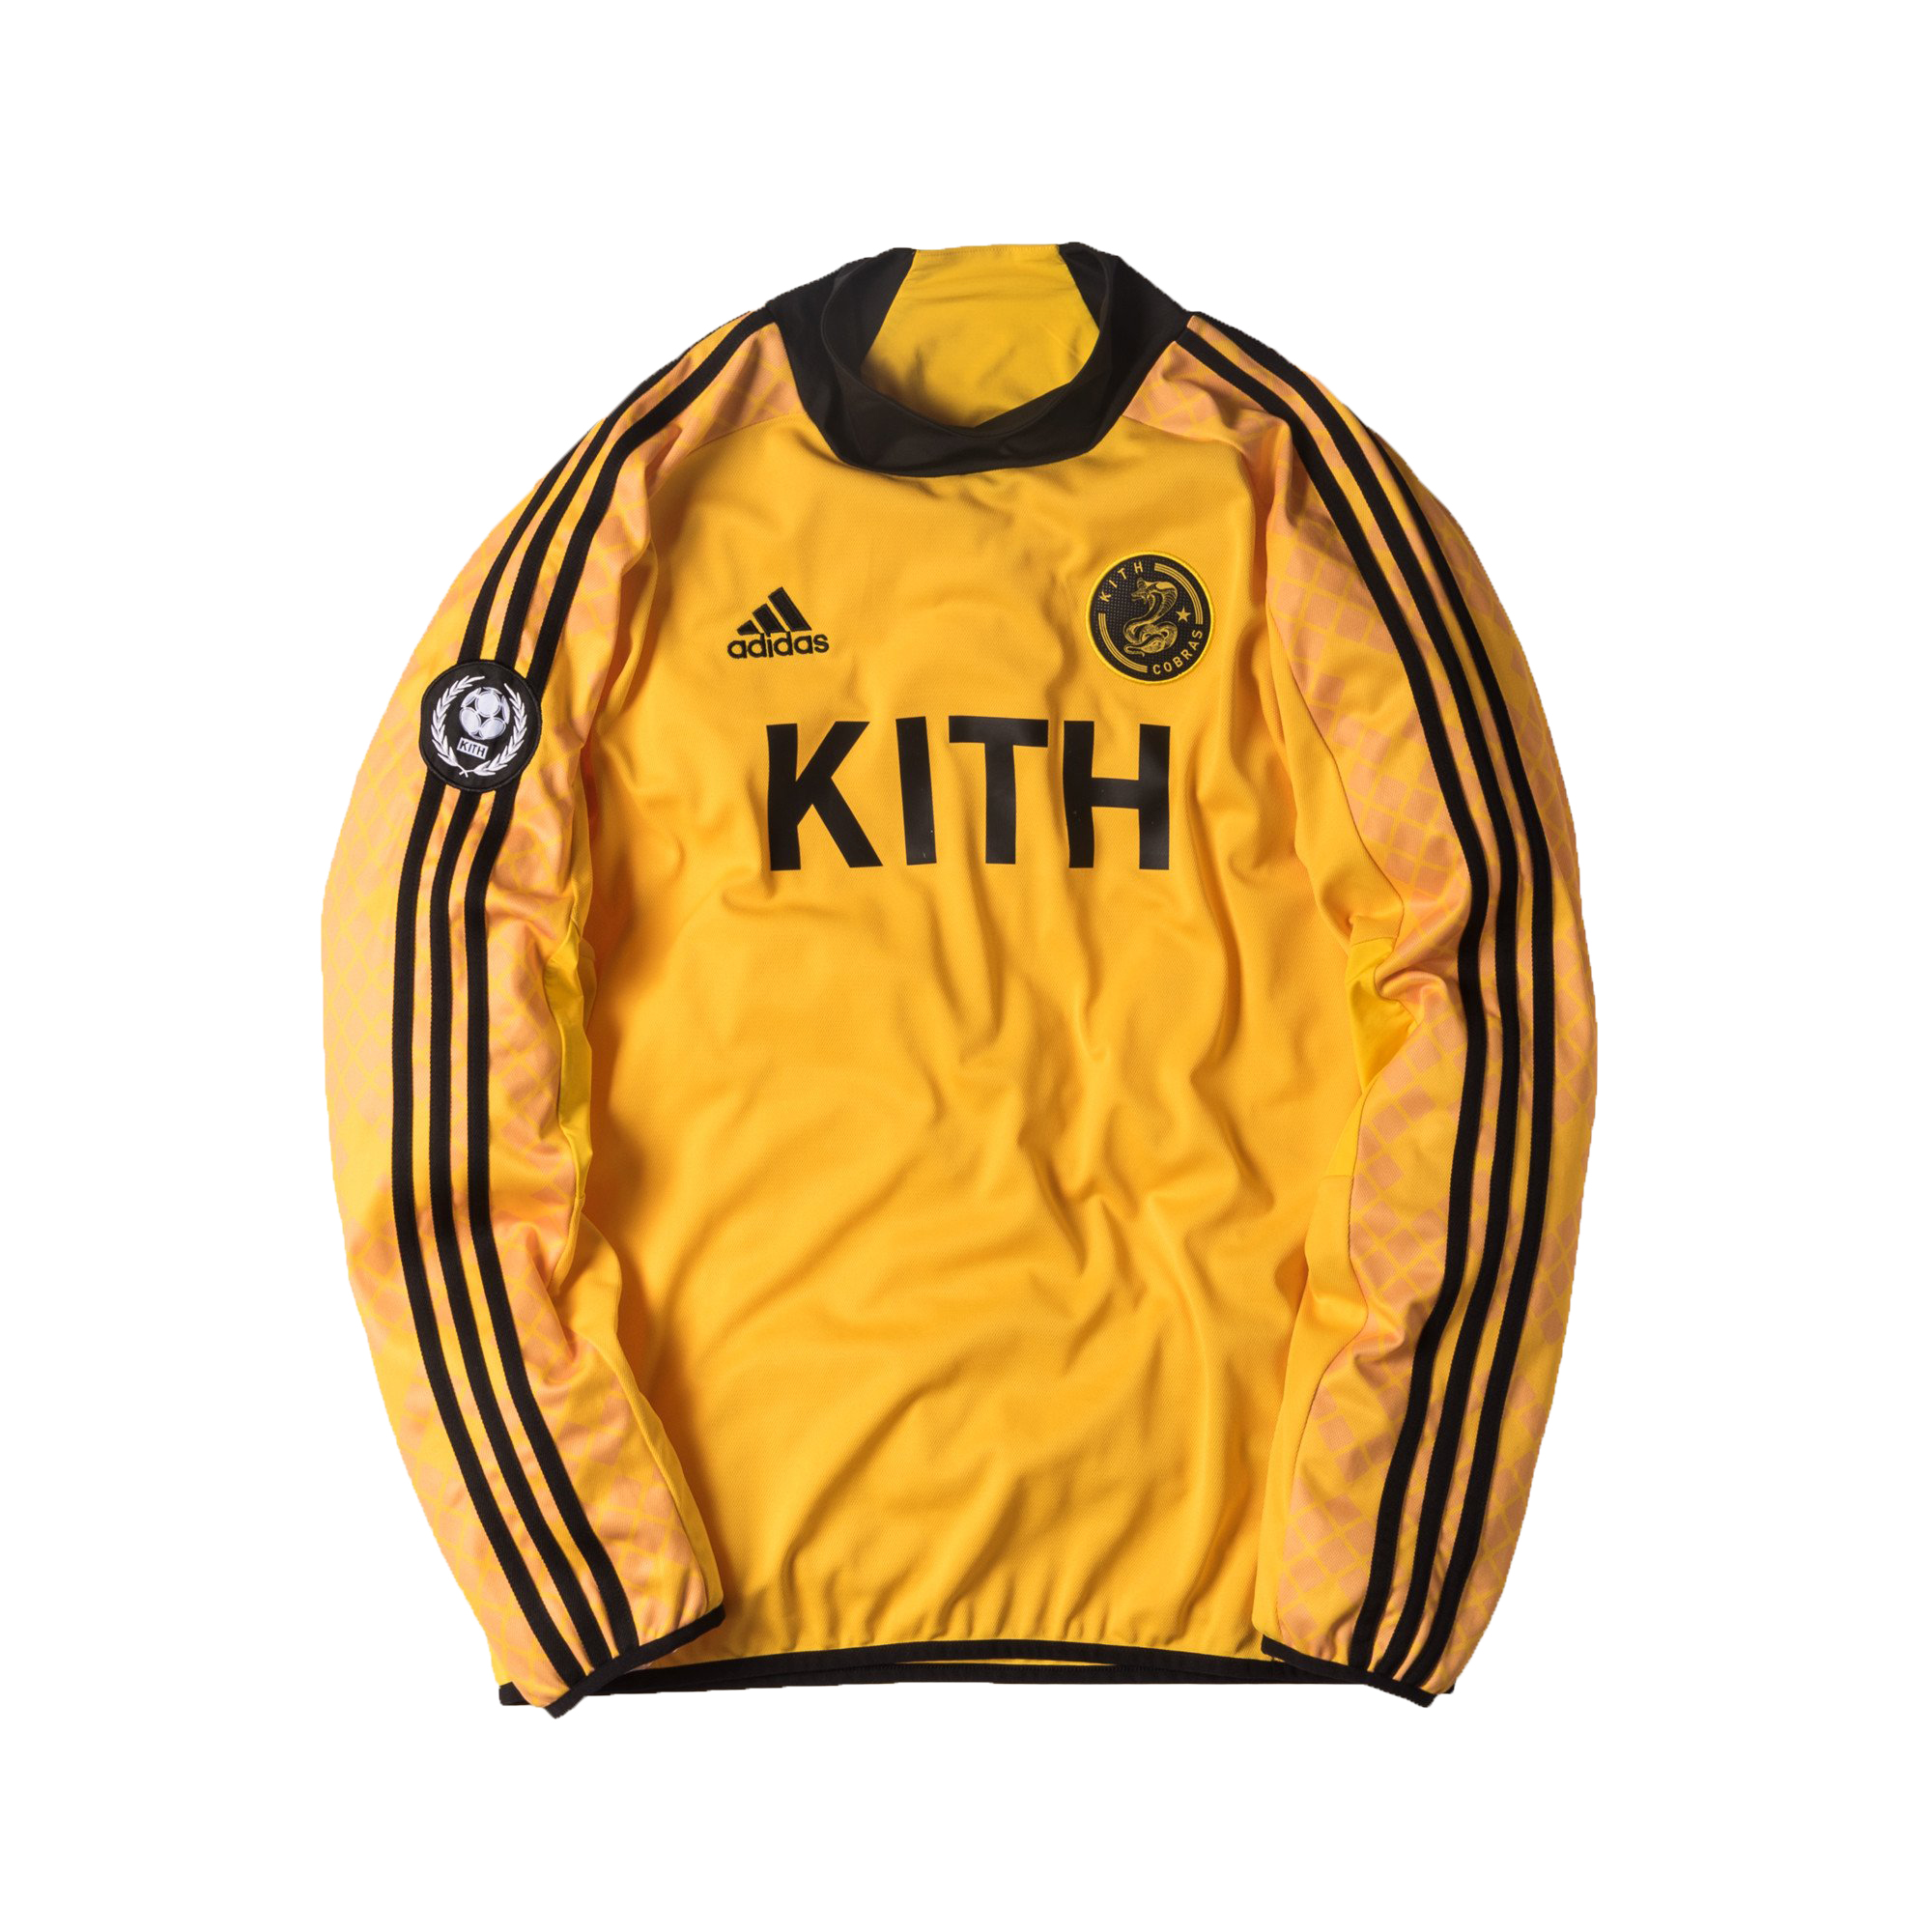 Kith adidas Soccer Cobras Goalie Jersey Yellow Men's - SS17 - US